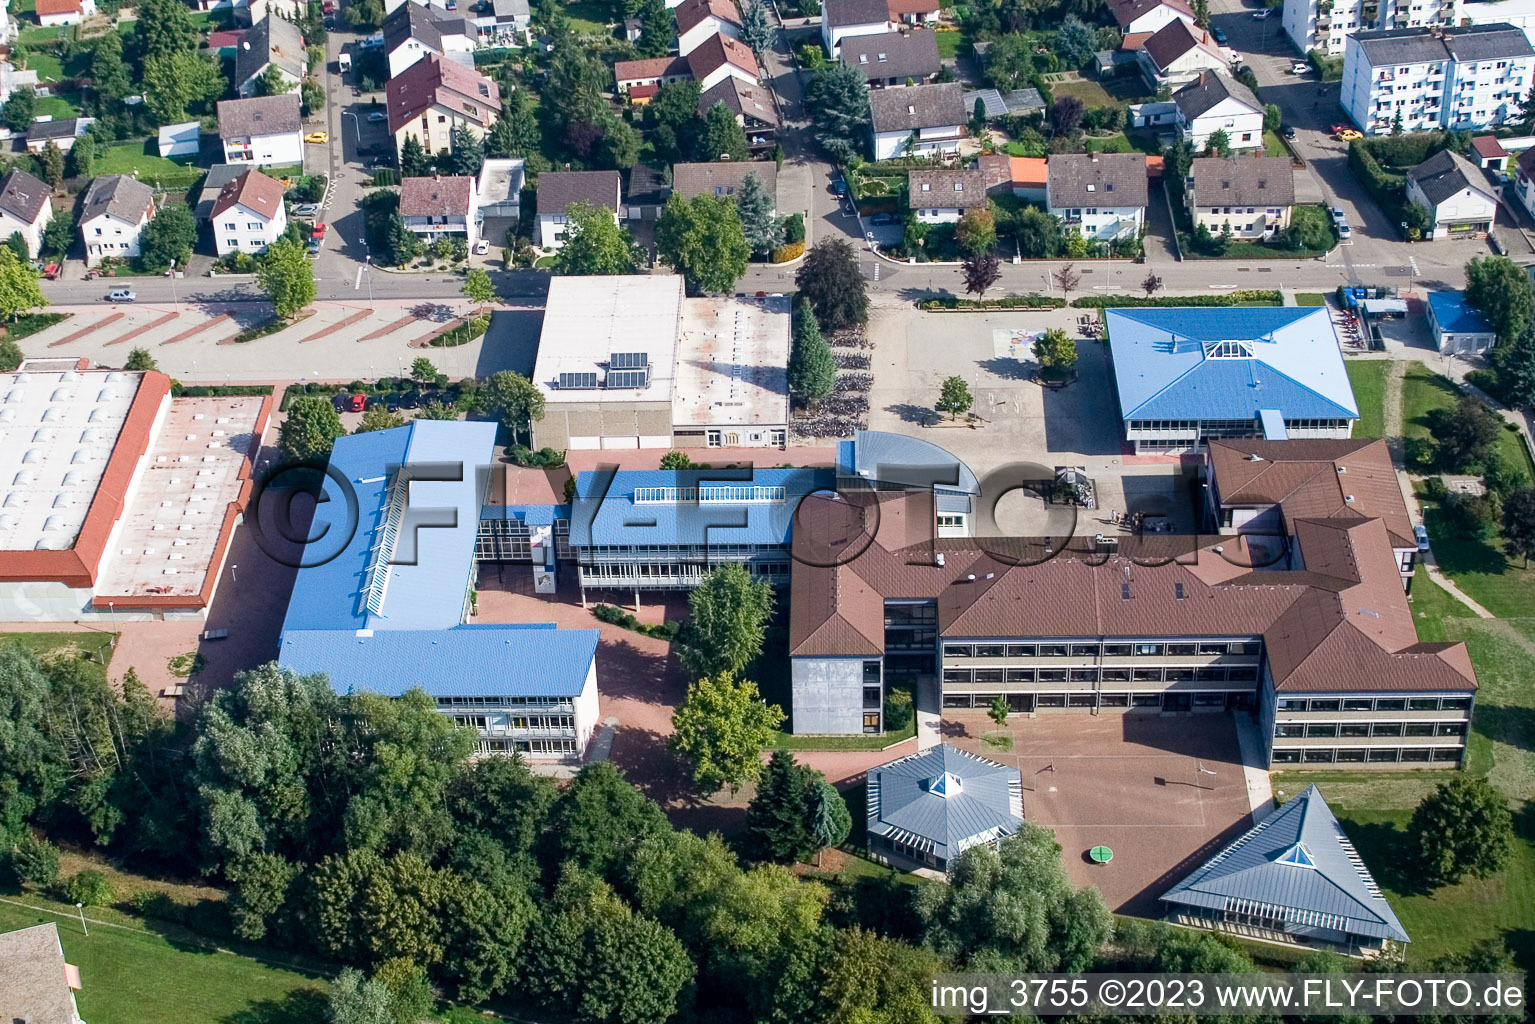 Aerial view of Comprehensive school in the district Herxheim in Herxheim bei Landau/Pfalz in the state Rhineland-Palatinate, Germany